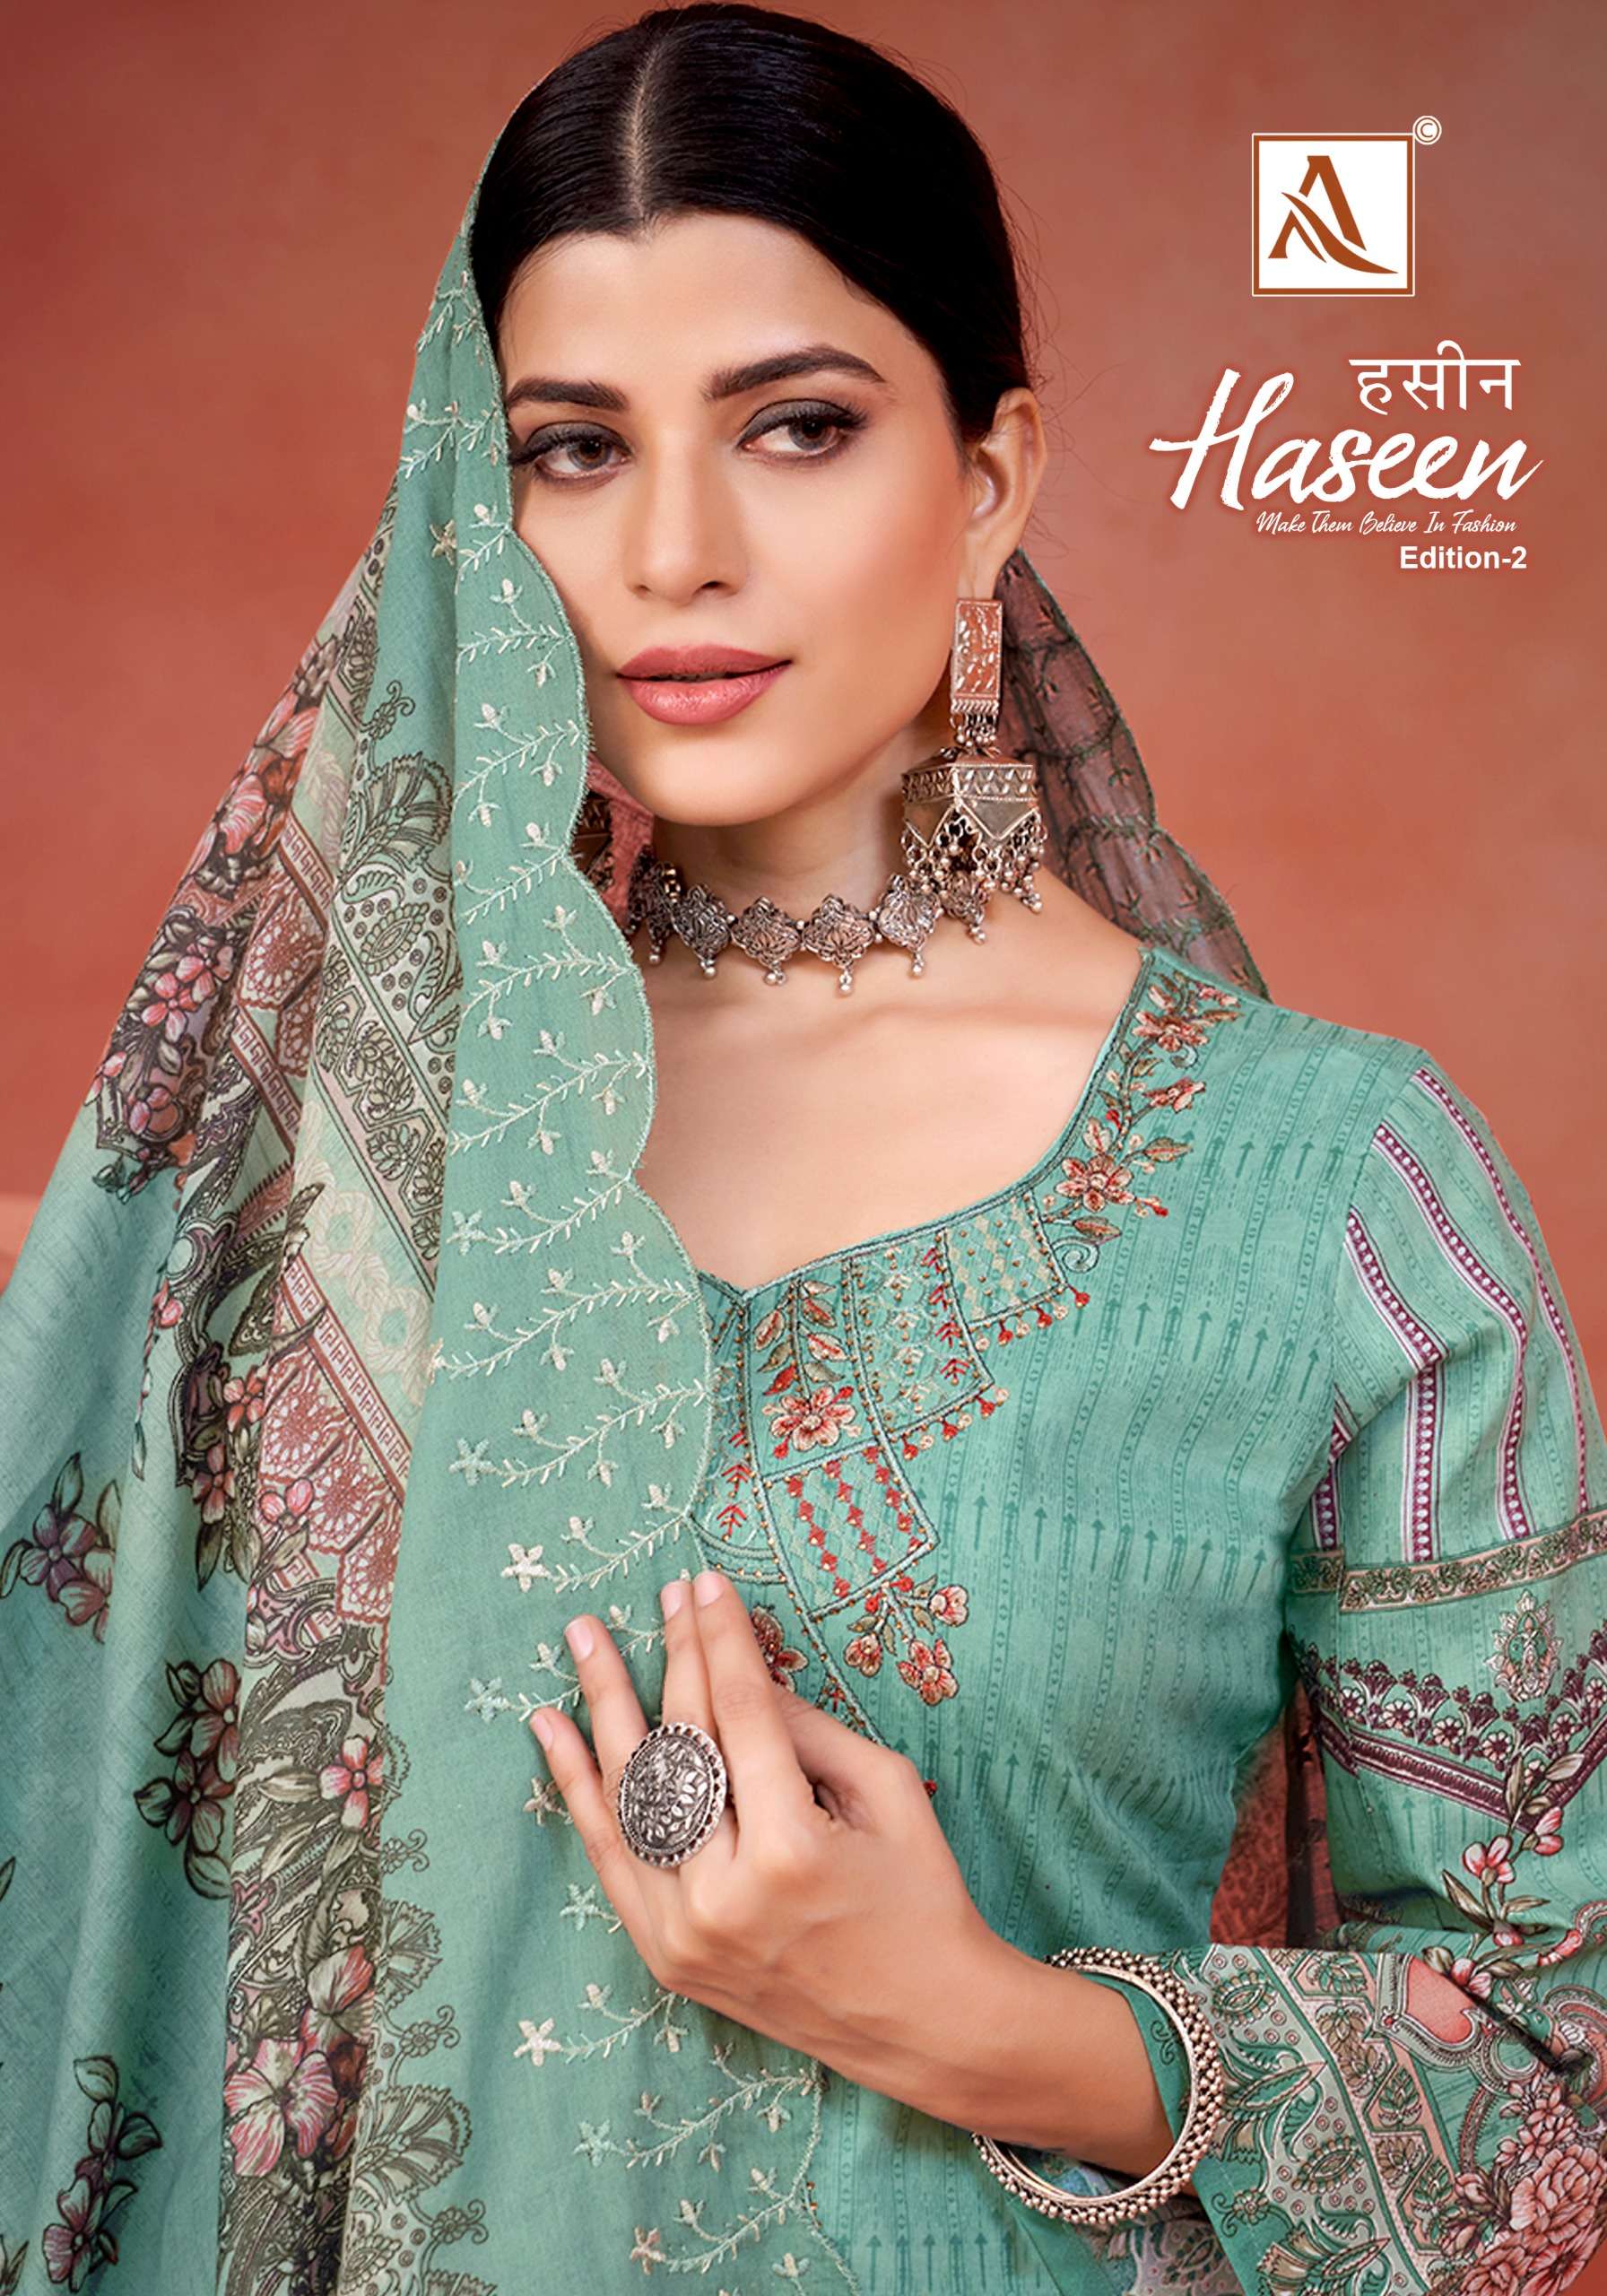 alok suit haseen vol-2 pure cotton cambric designer salwar kameez dress material wholesale rate dealer surat gujarat